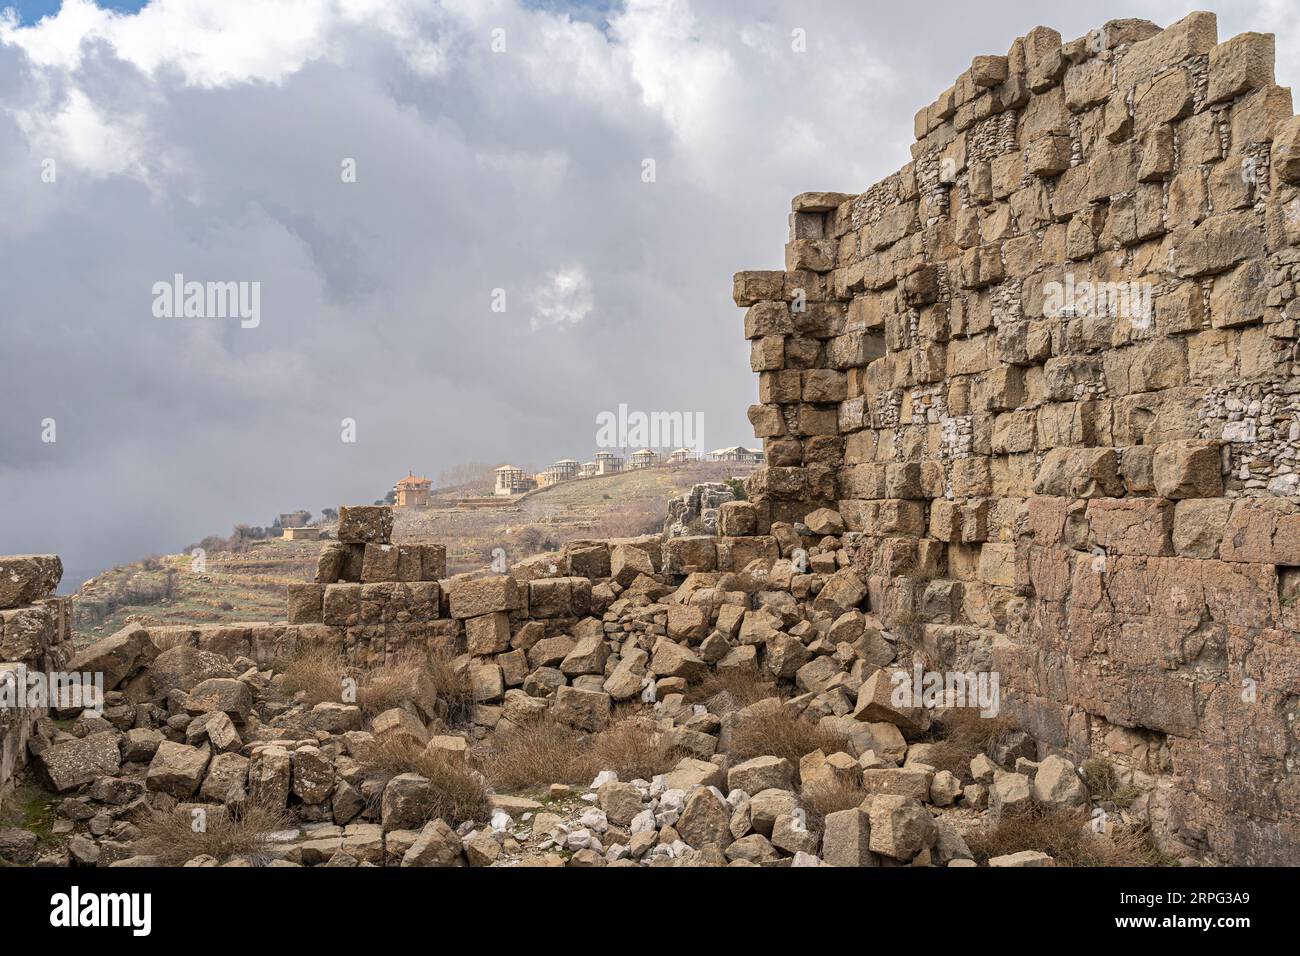 Rock formations in Faqra, Lebanon Stock Photo